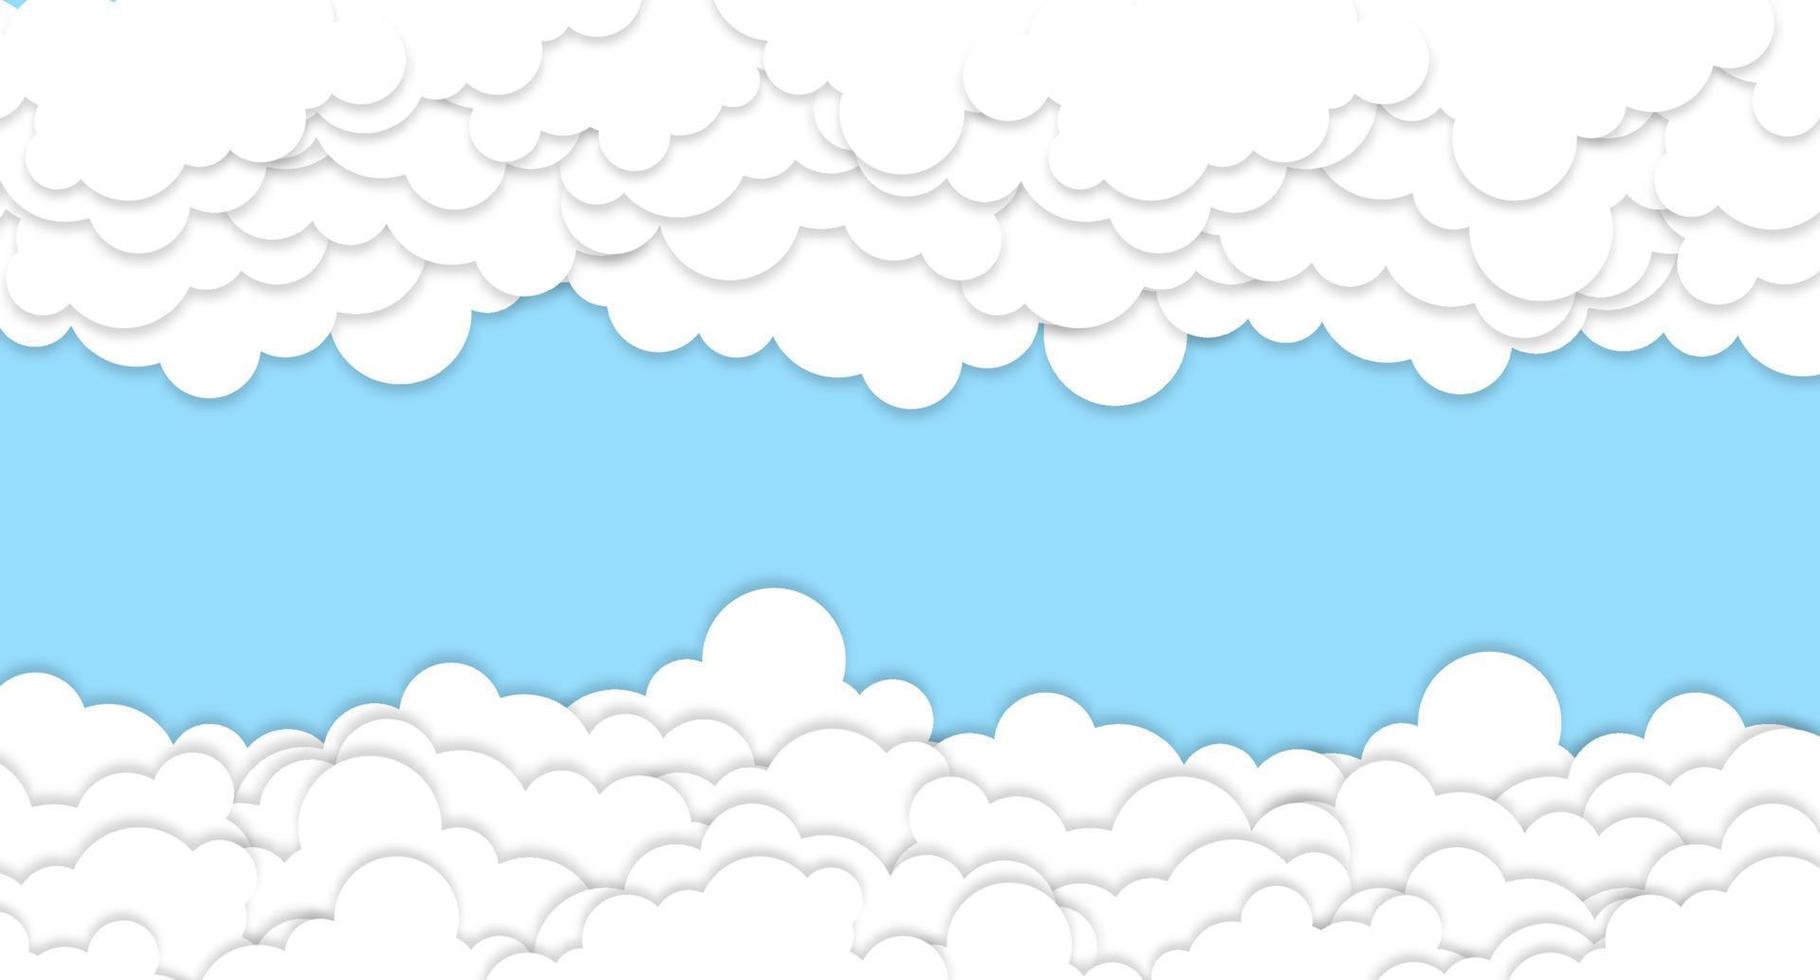 wolken op blauwe hemelbanner. witte wolk op blauwe lucht in papier gesneden stijl. wolken op transparante achtergrond. vector papier clouds.white wolk op blauwe hemel papier gesneden ontwerp. vector papier kunst illustratie